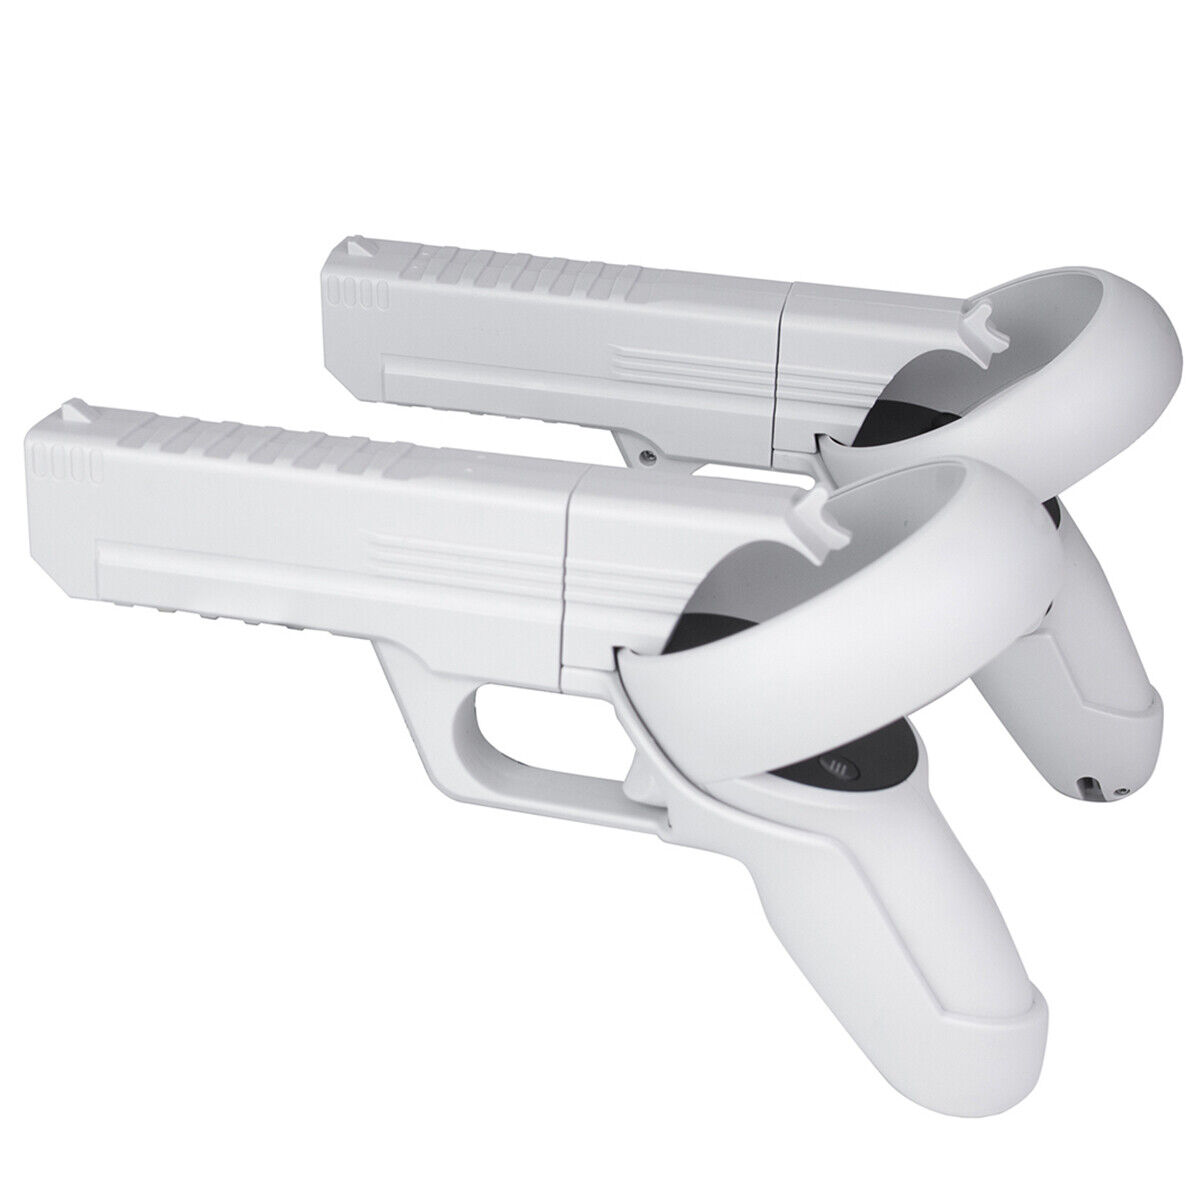 MOJOXR VR Game Gun Pistol Grips Accessories for Meta/Oculus Quest 2 Controllers